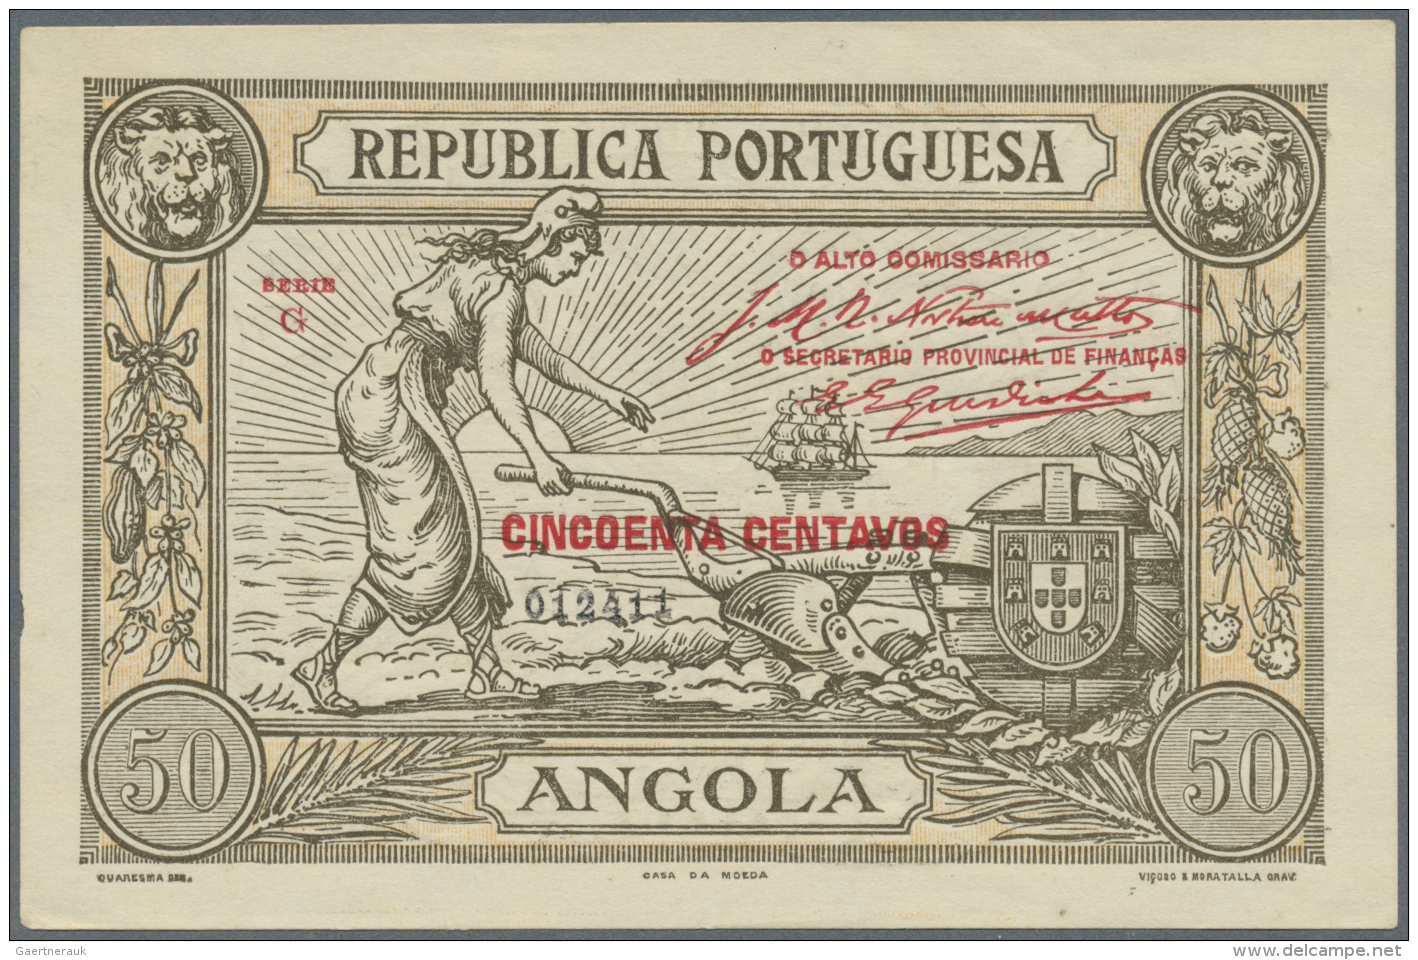 Angola: 50 Centavos Republica Portuguesa Angola 1921, P.62 In Excellent Condition With A Few Minor Spots, Tiny Dint At L - Angola